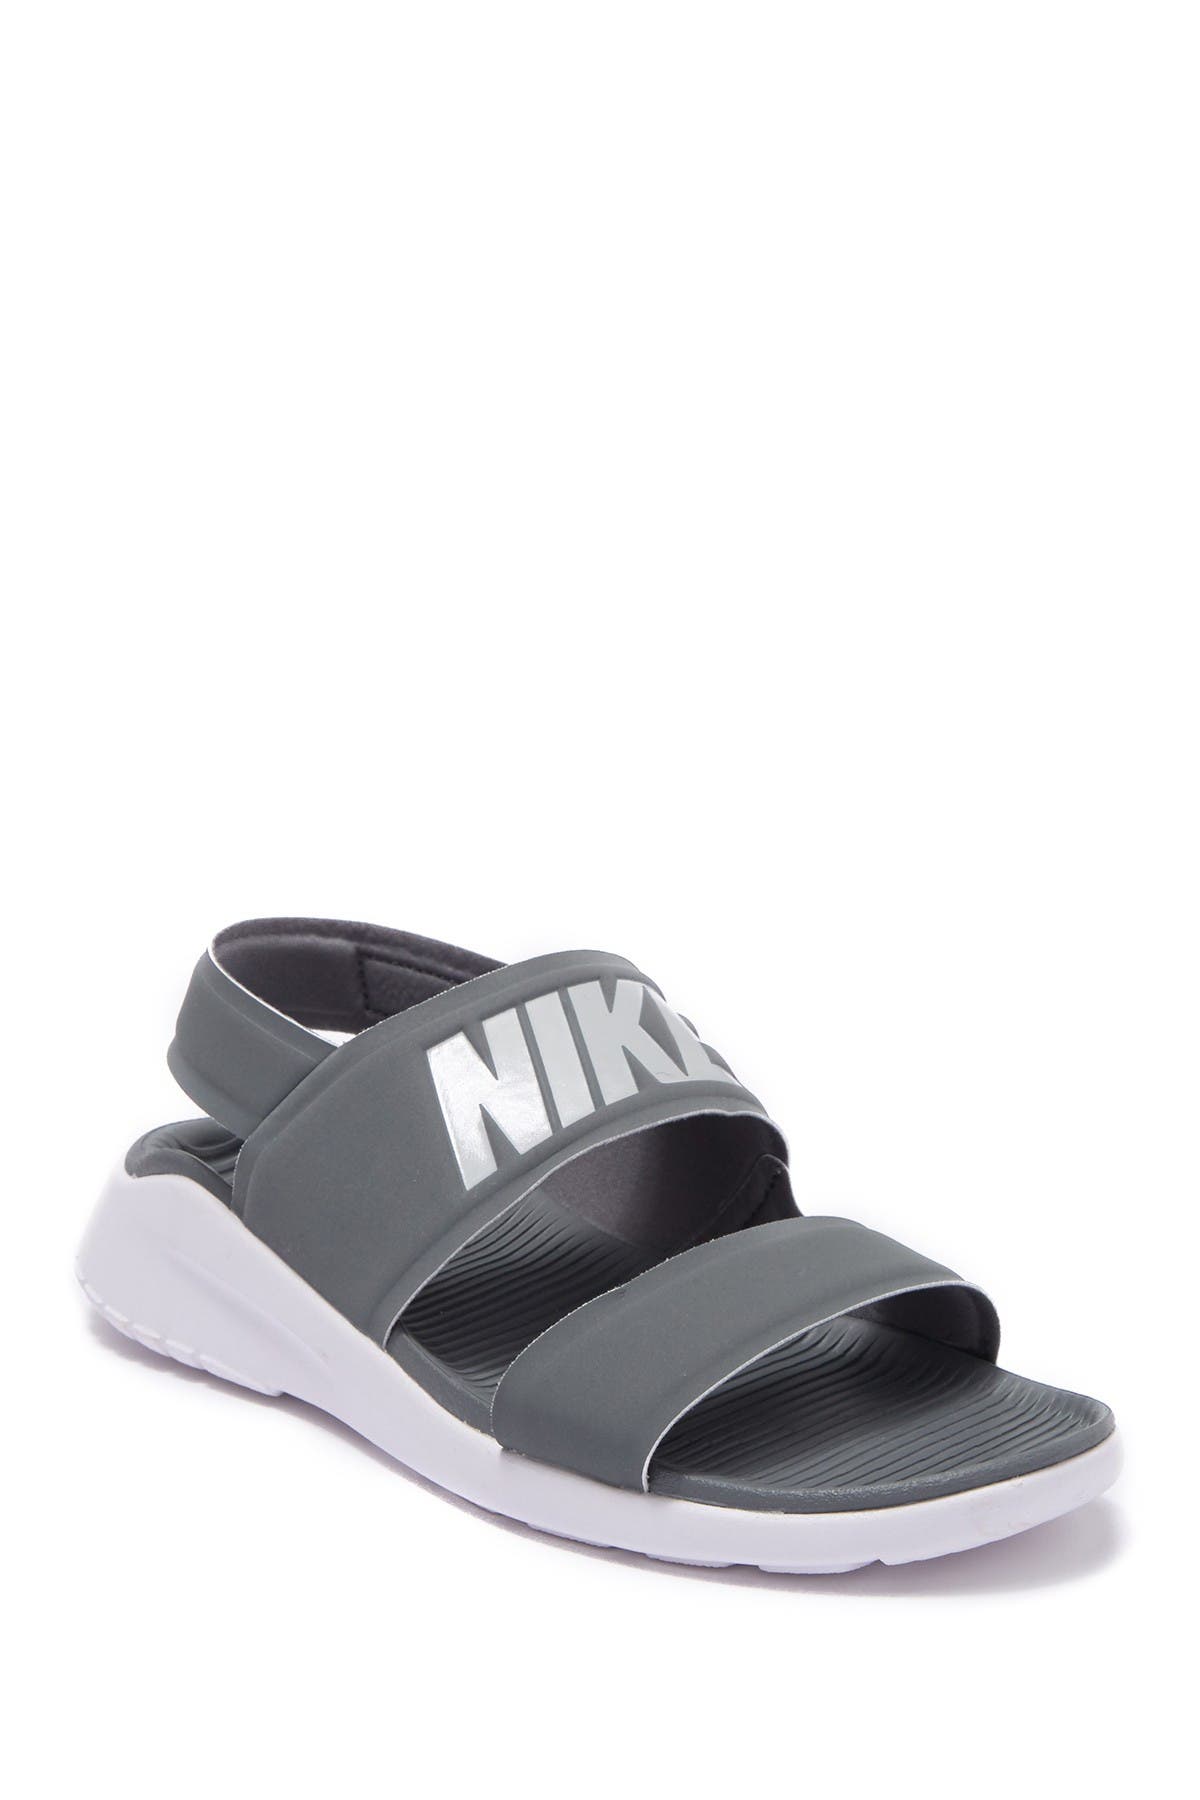 grey tanjun nike sandals